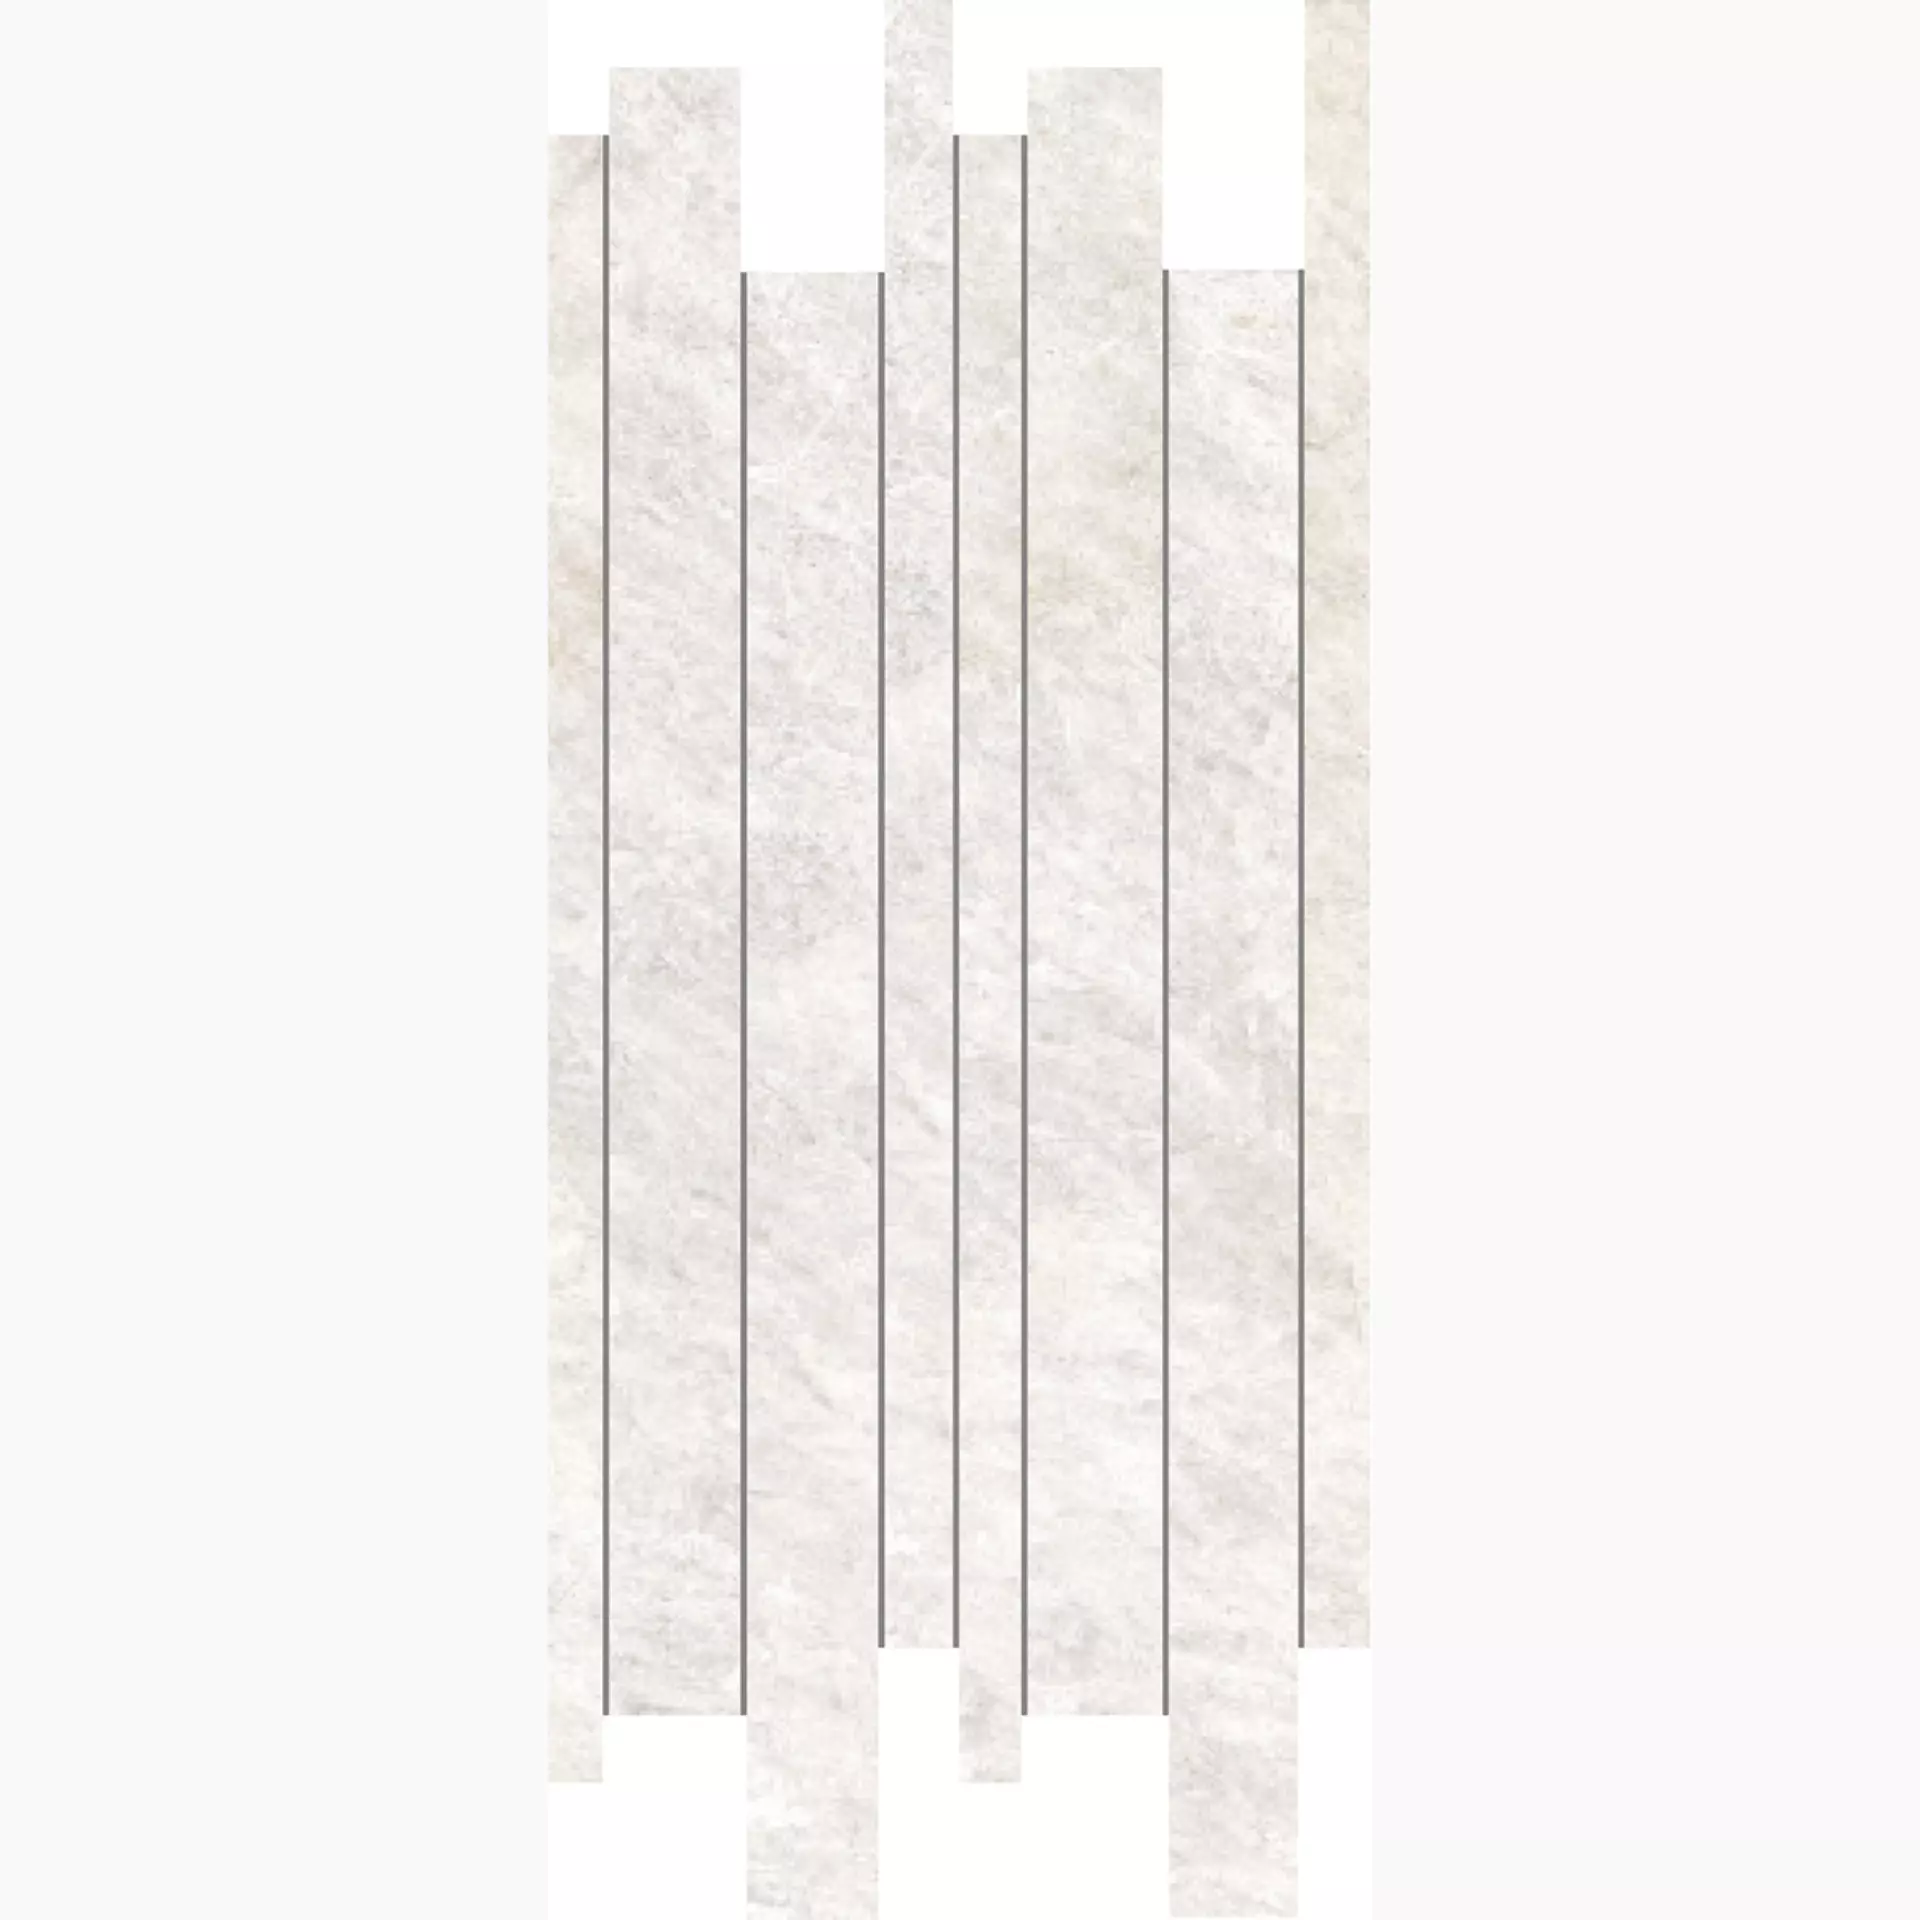 Rondine Quarzi White Naturale Muretto J87325 30x60cm 9,5mm